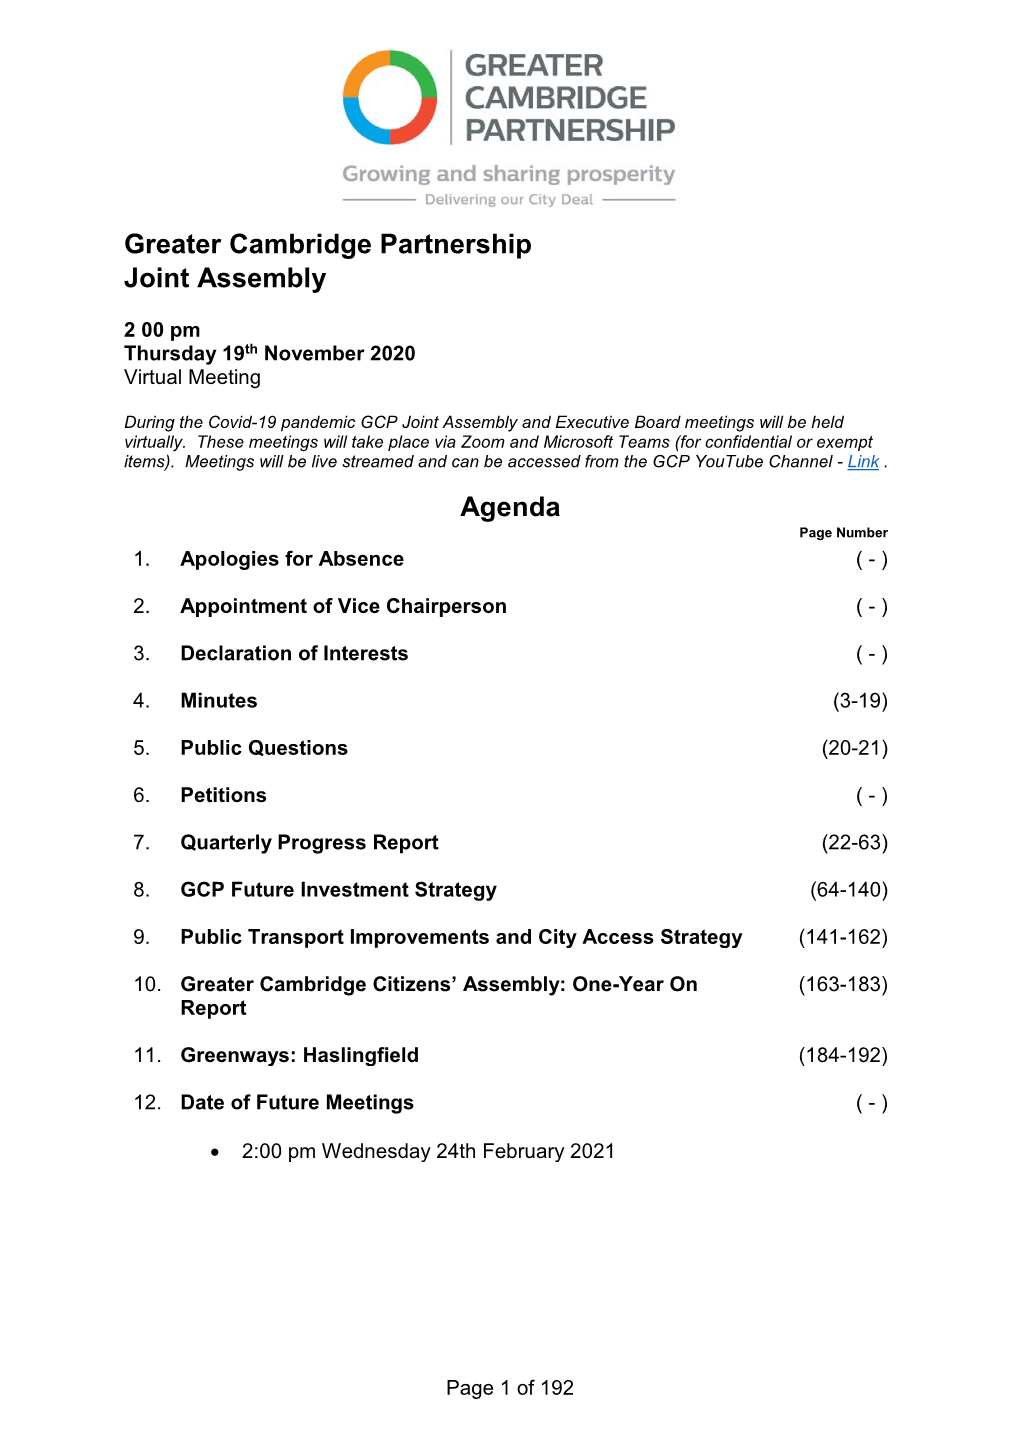 Greater Cambridge Partnership Joint Assembly Agenda